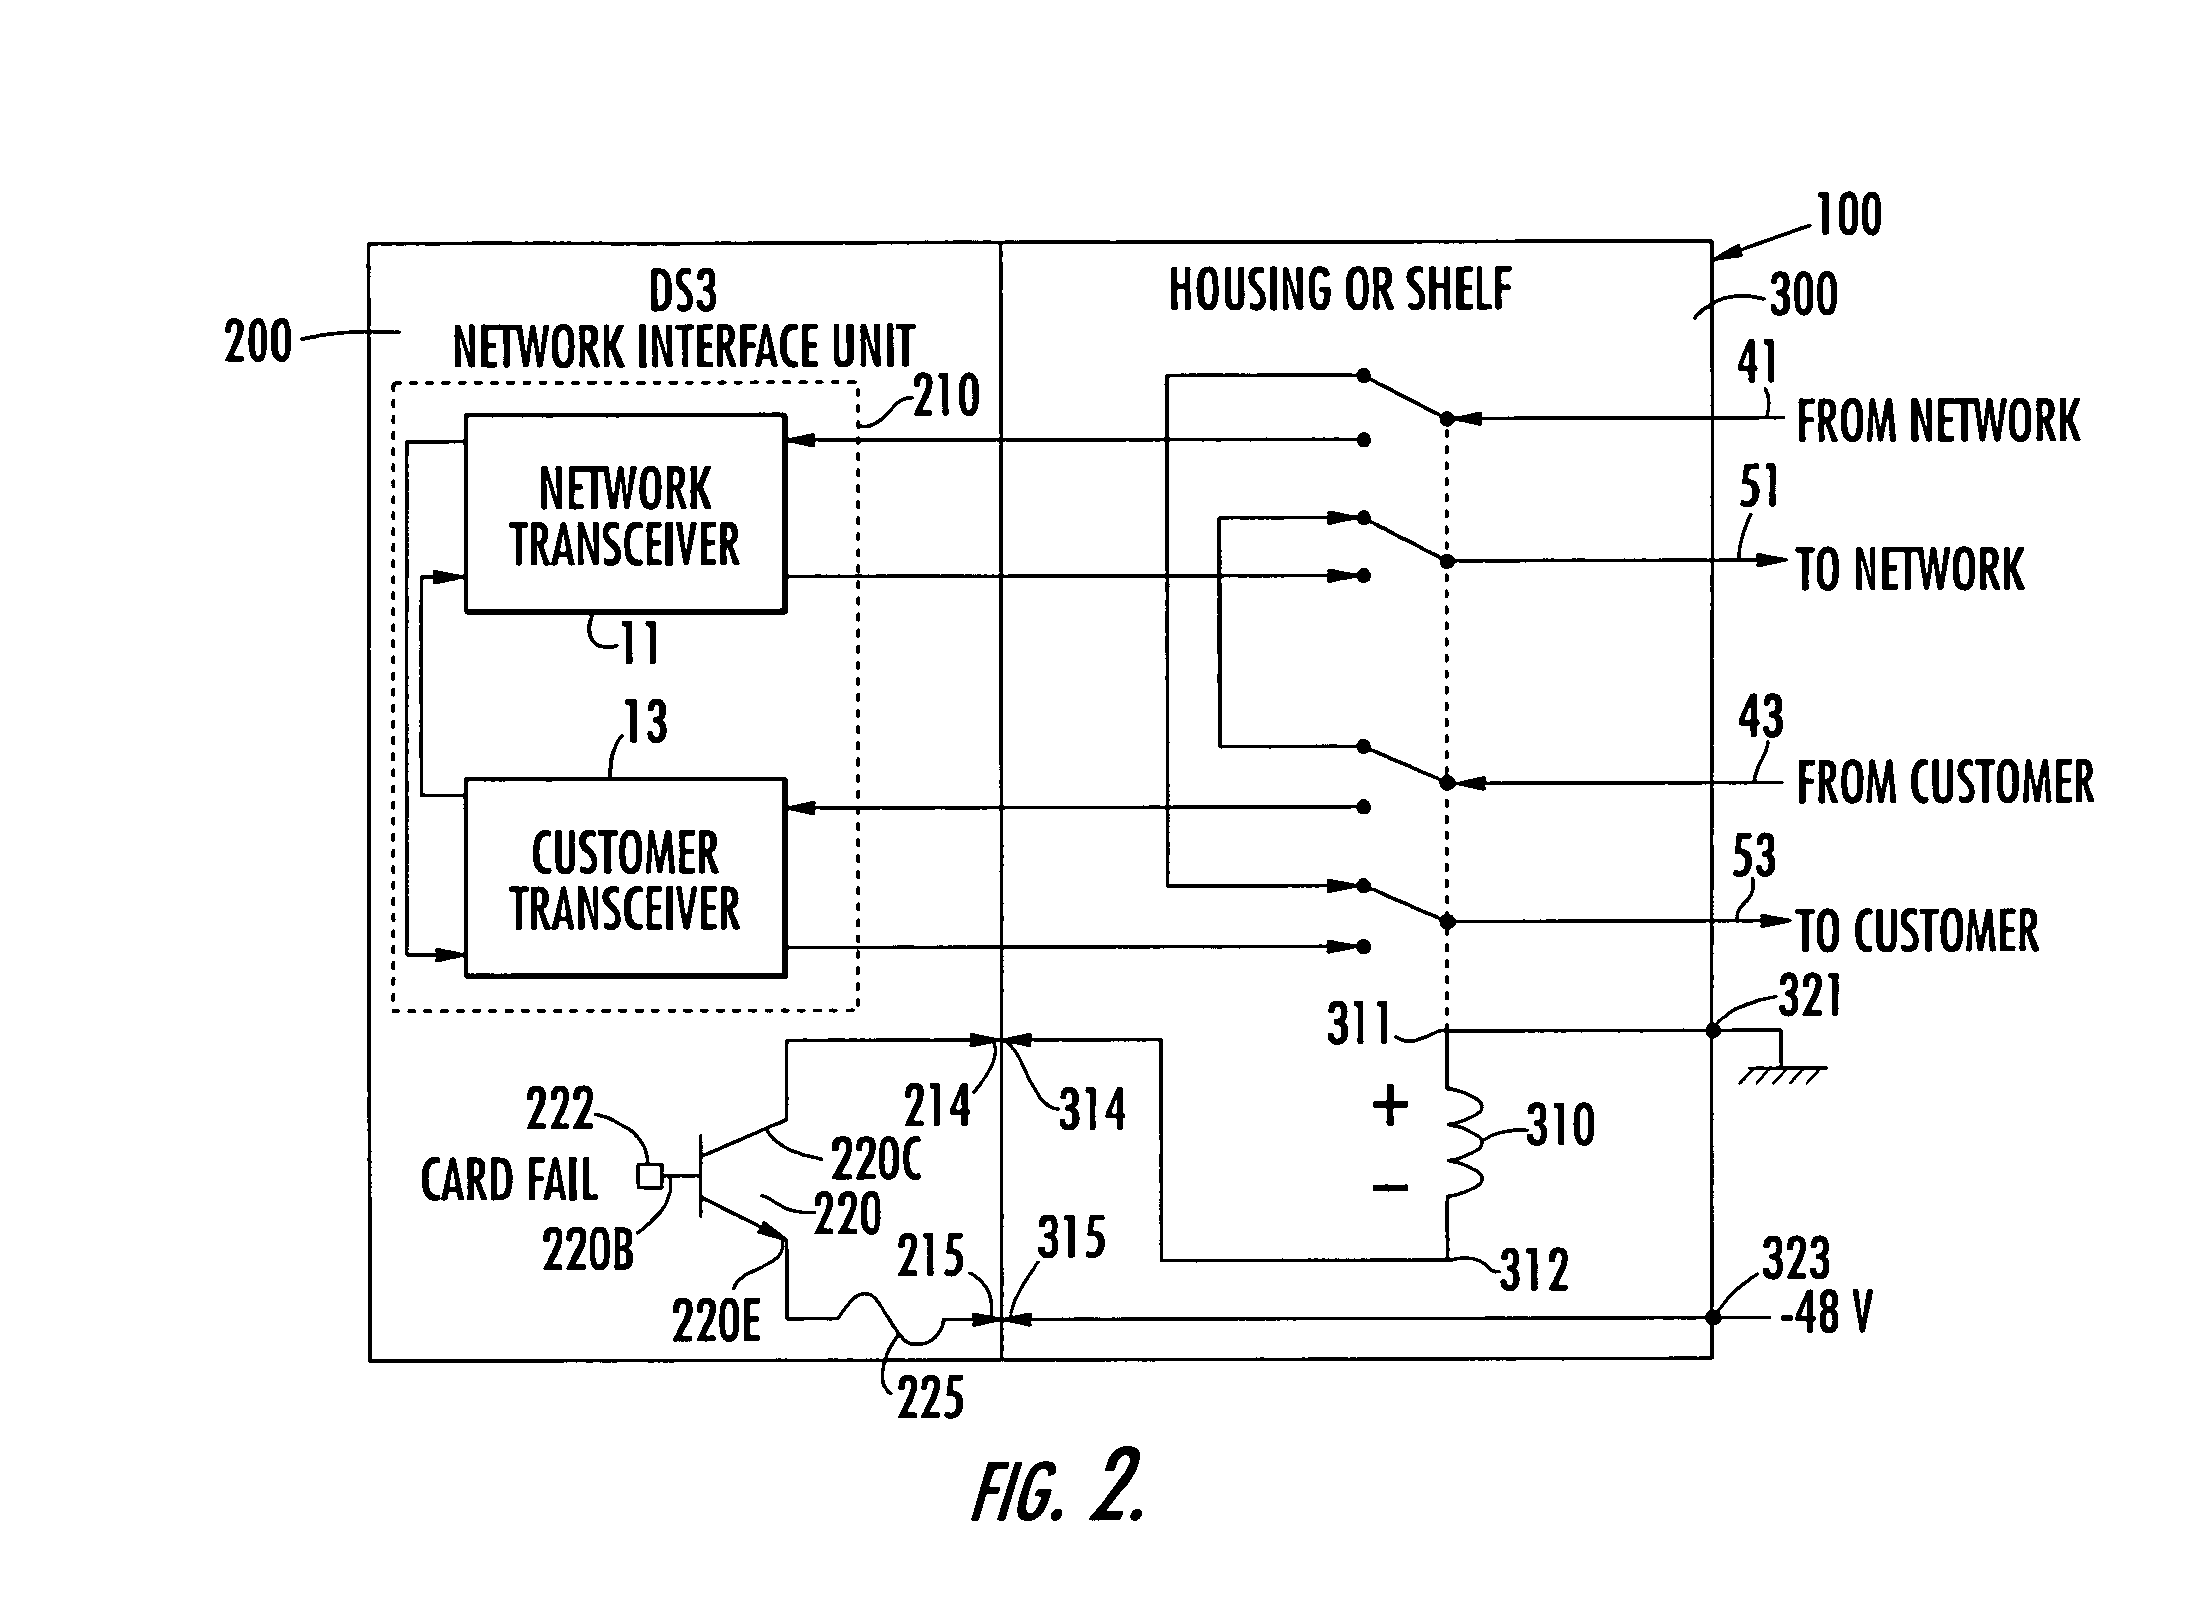 Equipment shelf-resident network interface unit by-pass circuit